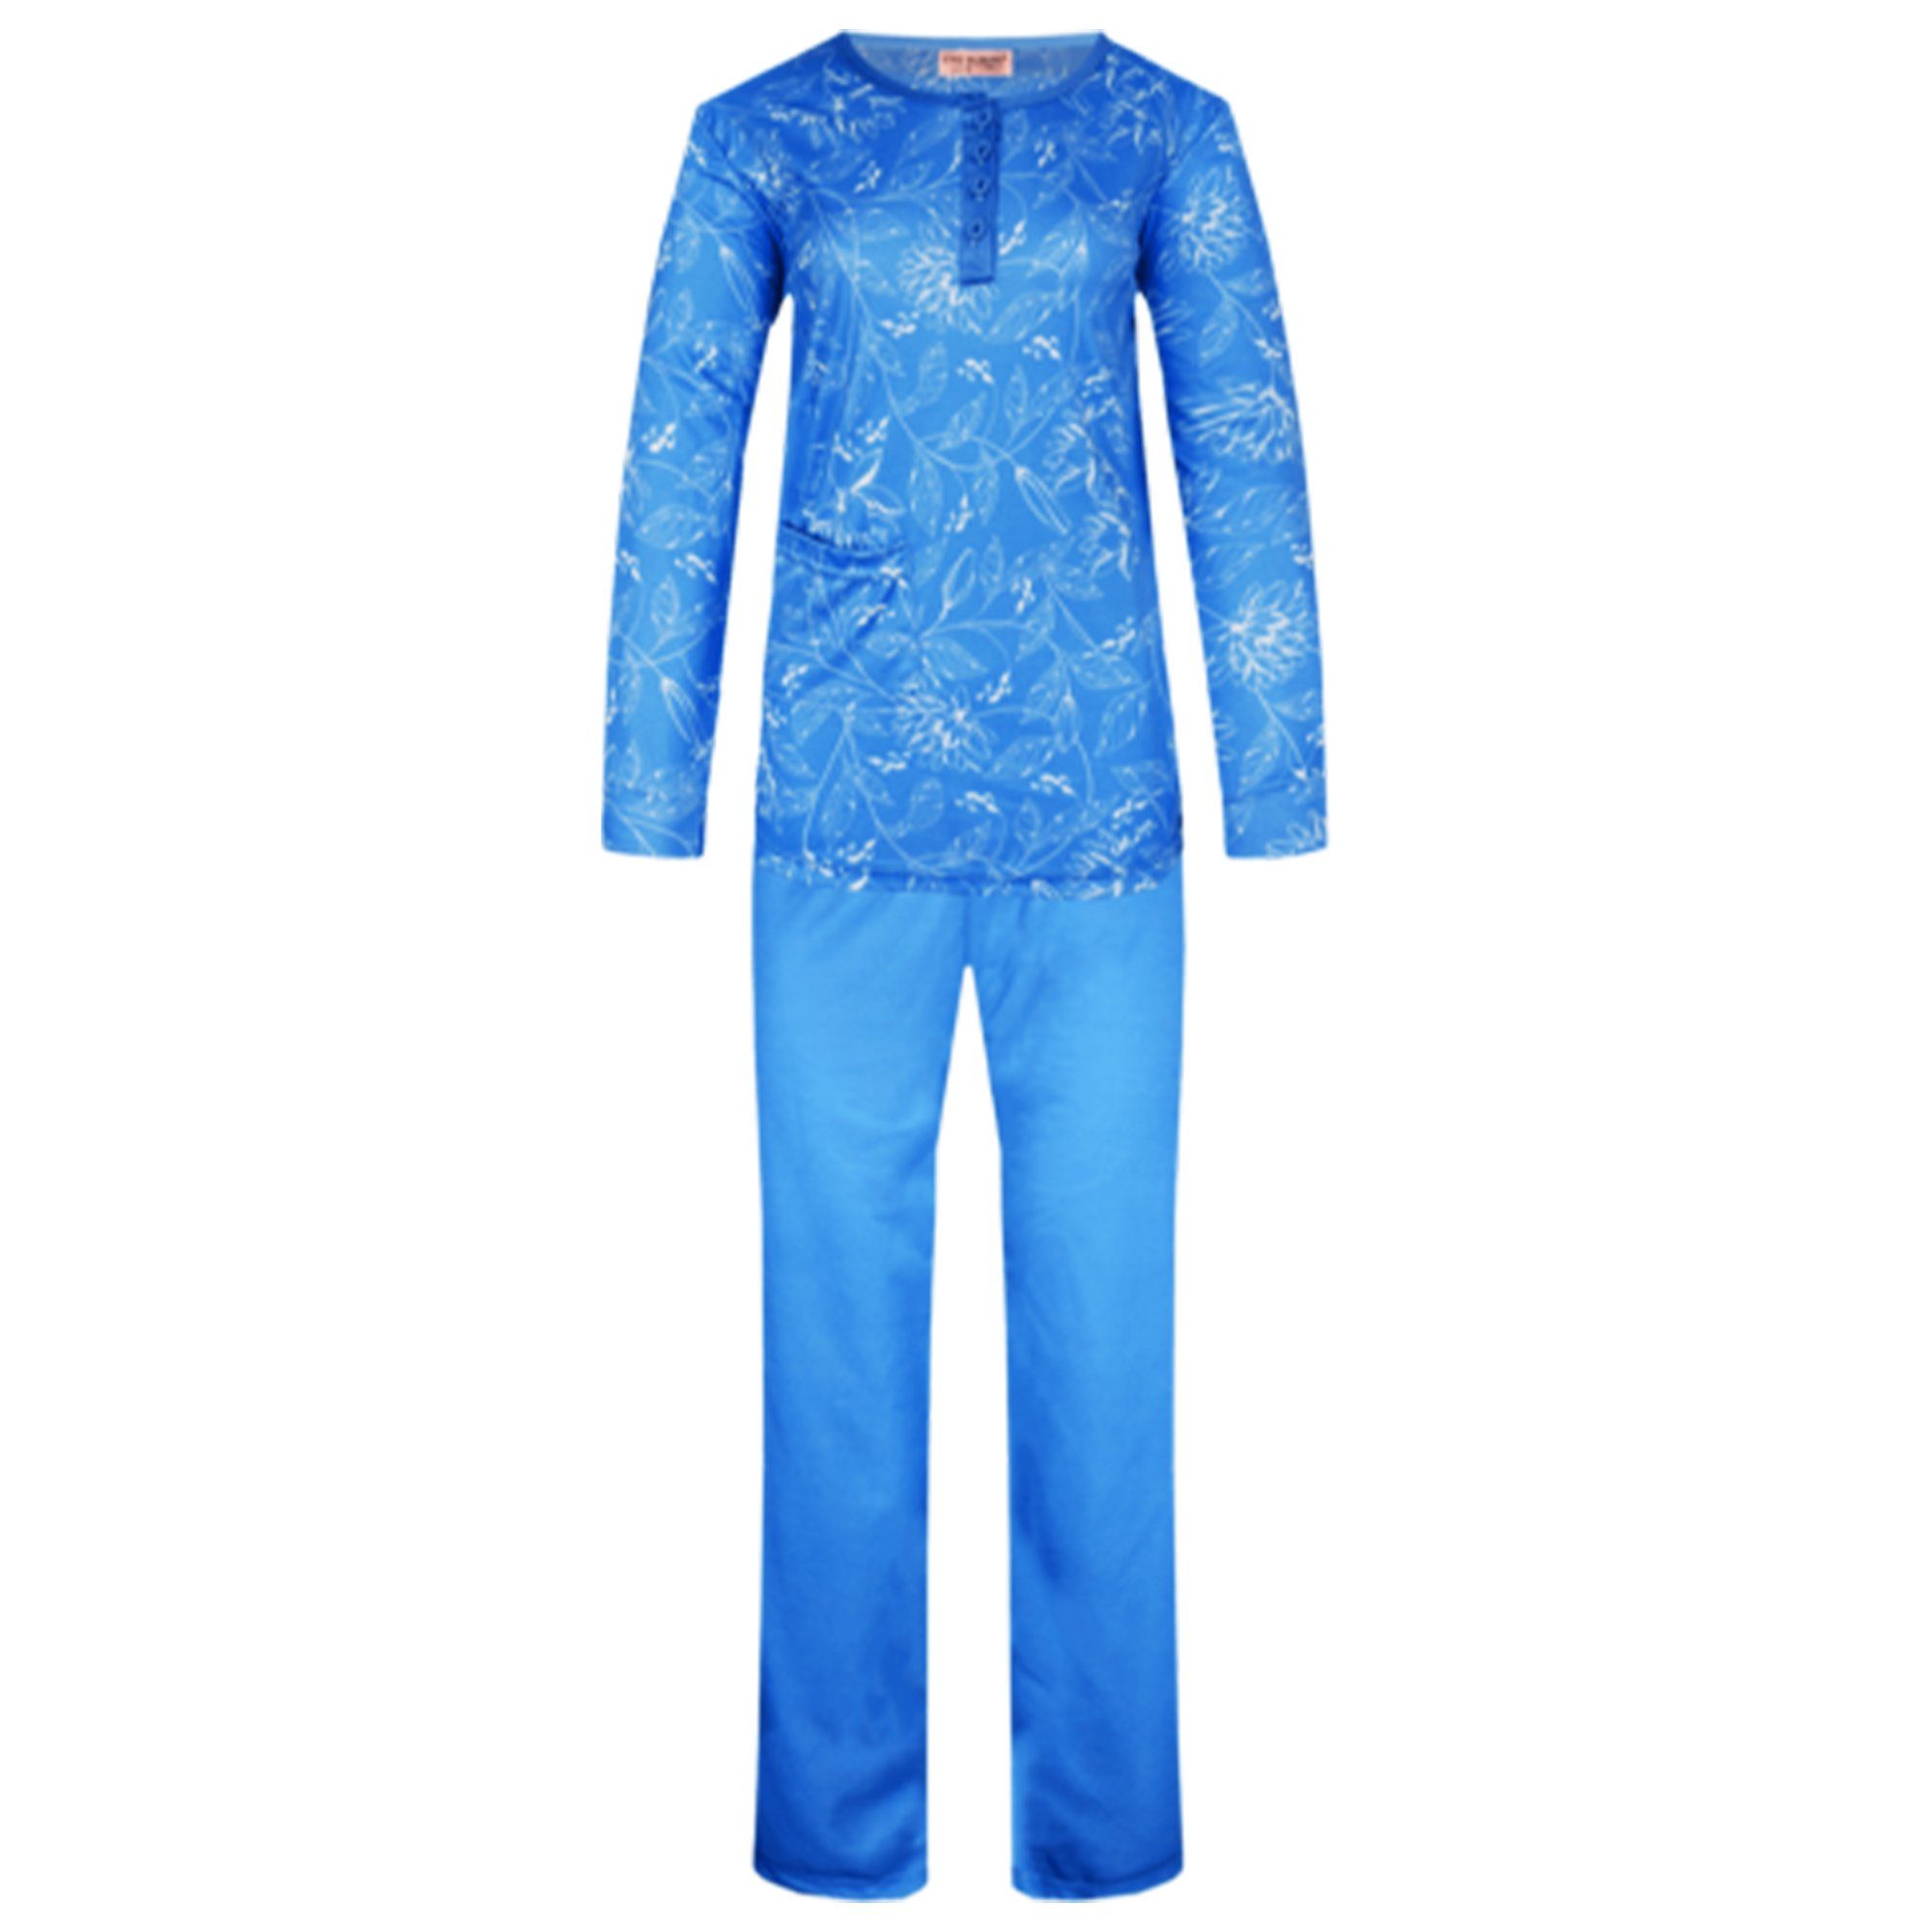 Pyjama Schlafanzug TEXEMP Blau Set Baumwolle Langarm Baumwolle 90% (Set) Damen Lang Pyjama Nachtwäsche